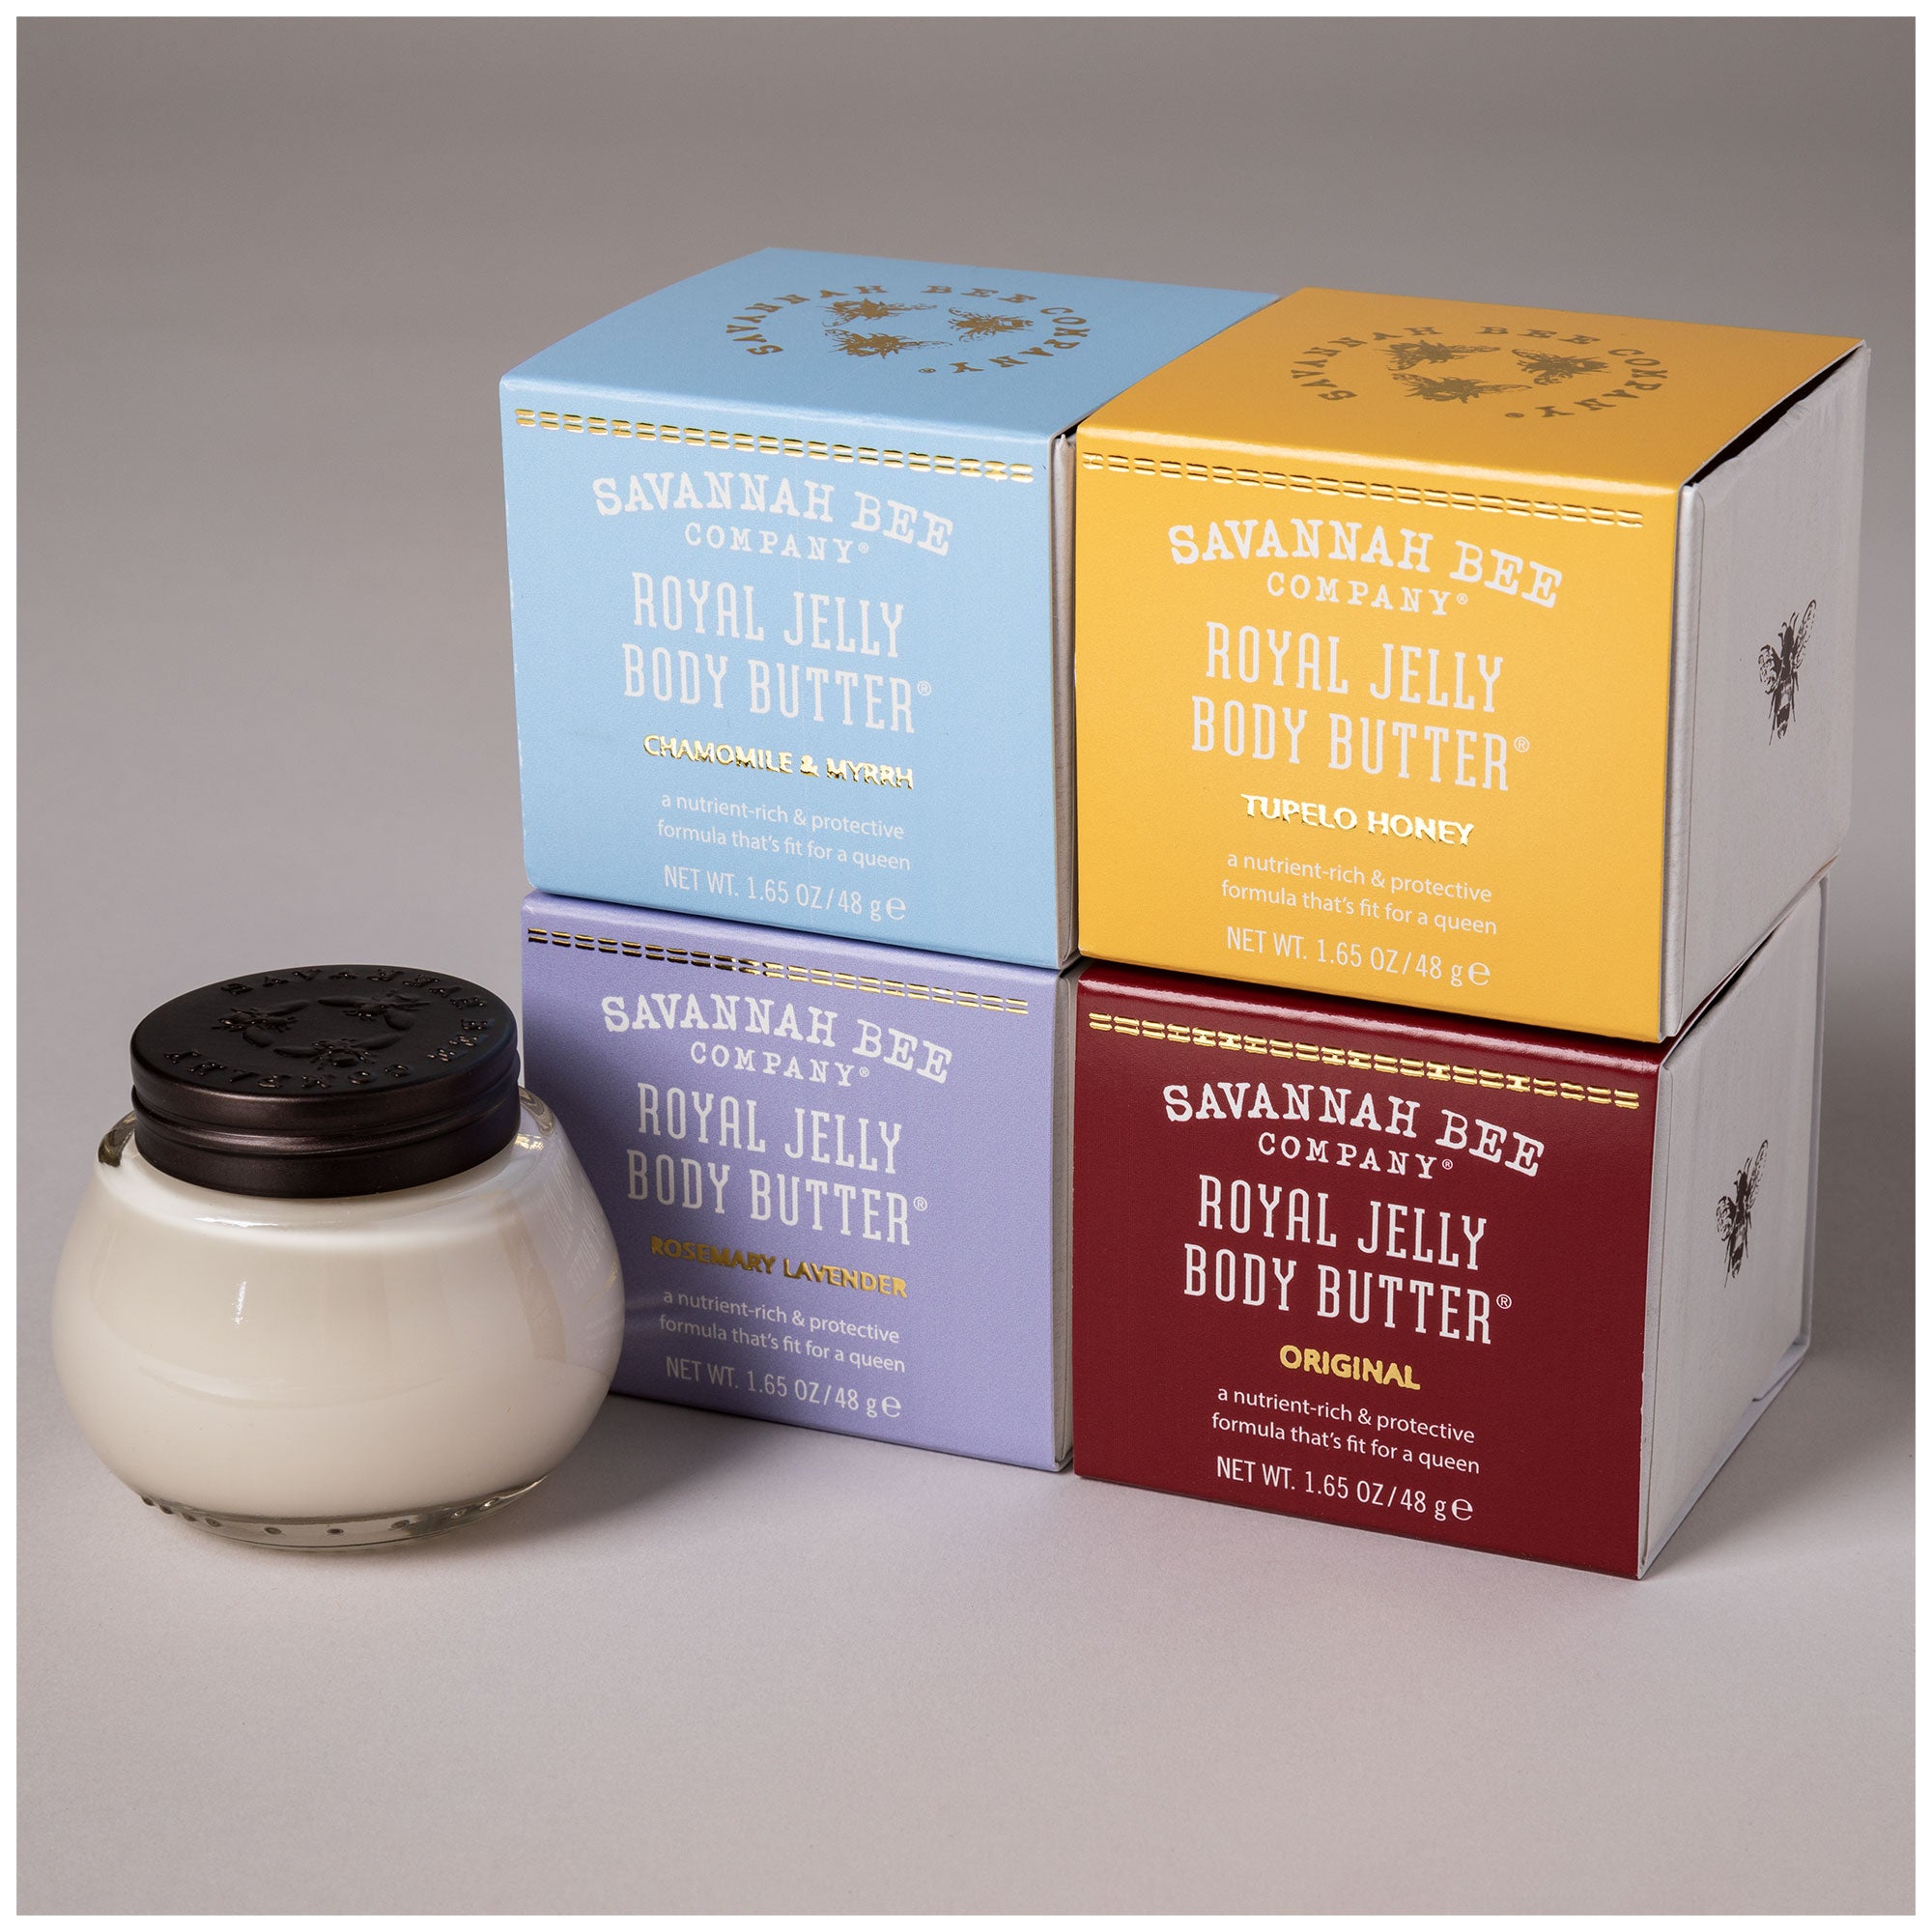 Savannah Bee Company® Royal Jelly Body Butter - Original